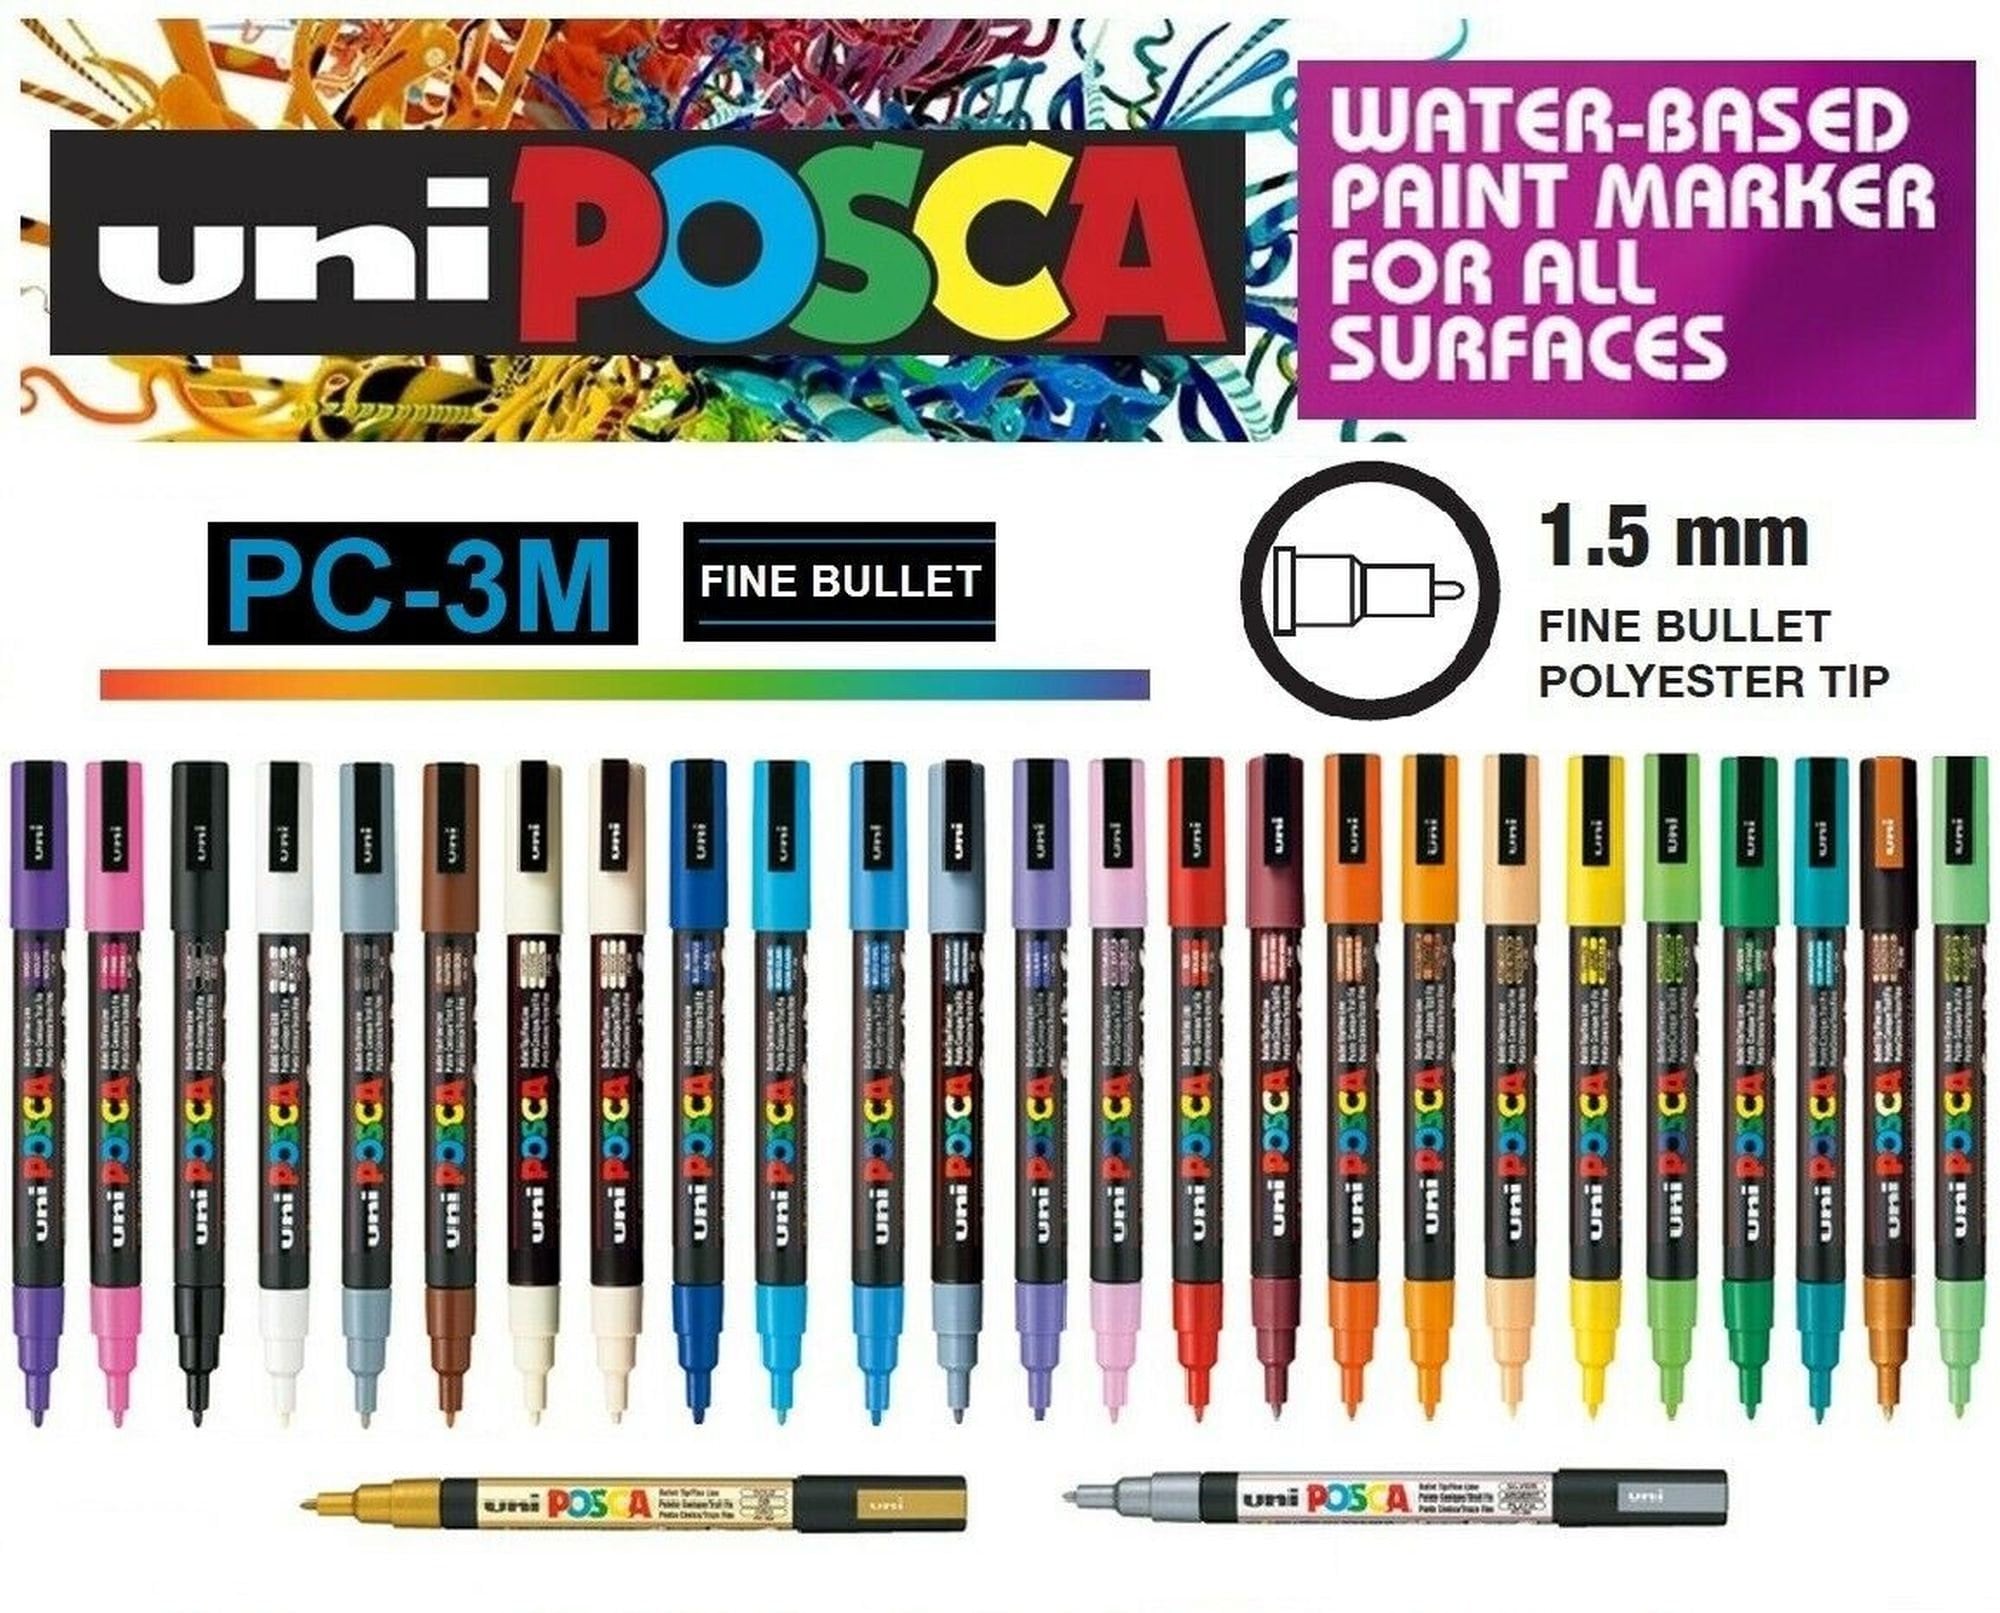 Acrylic Paint Pen - Fine - 1.5mm - Single Pens